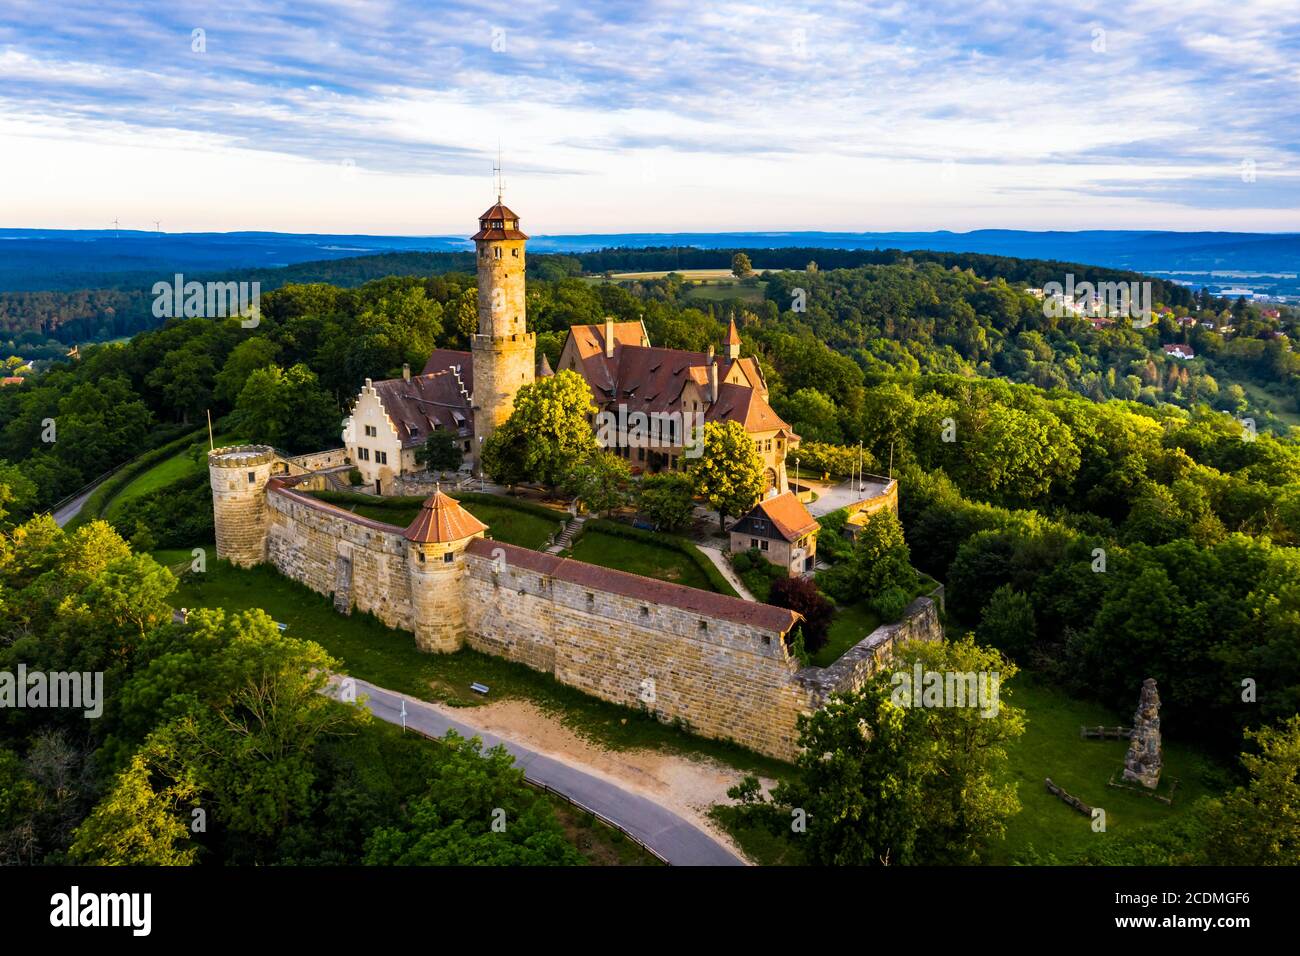 Drone photo, Altenburg, medieval hilltop castle, Bamberg, Steigerwaldhoehe, Upper Franconia, Franconia, Germany Stock Photo